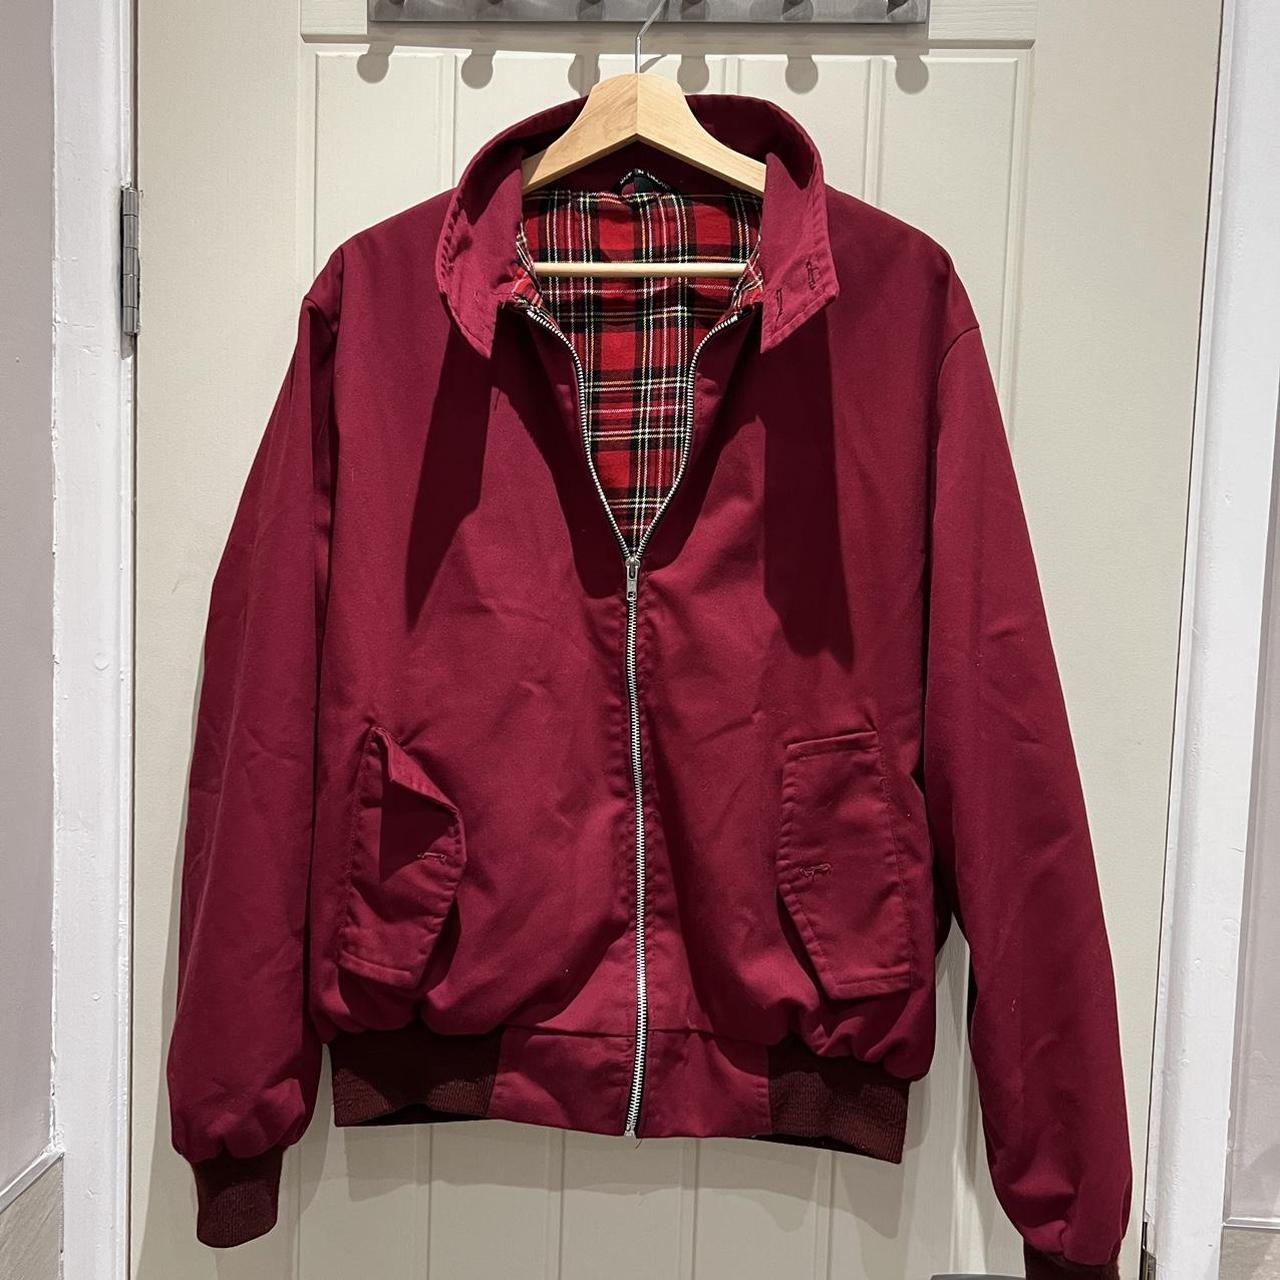 Burgundy Harrington jacket, size M, in great... - Depop